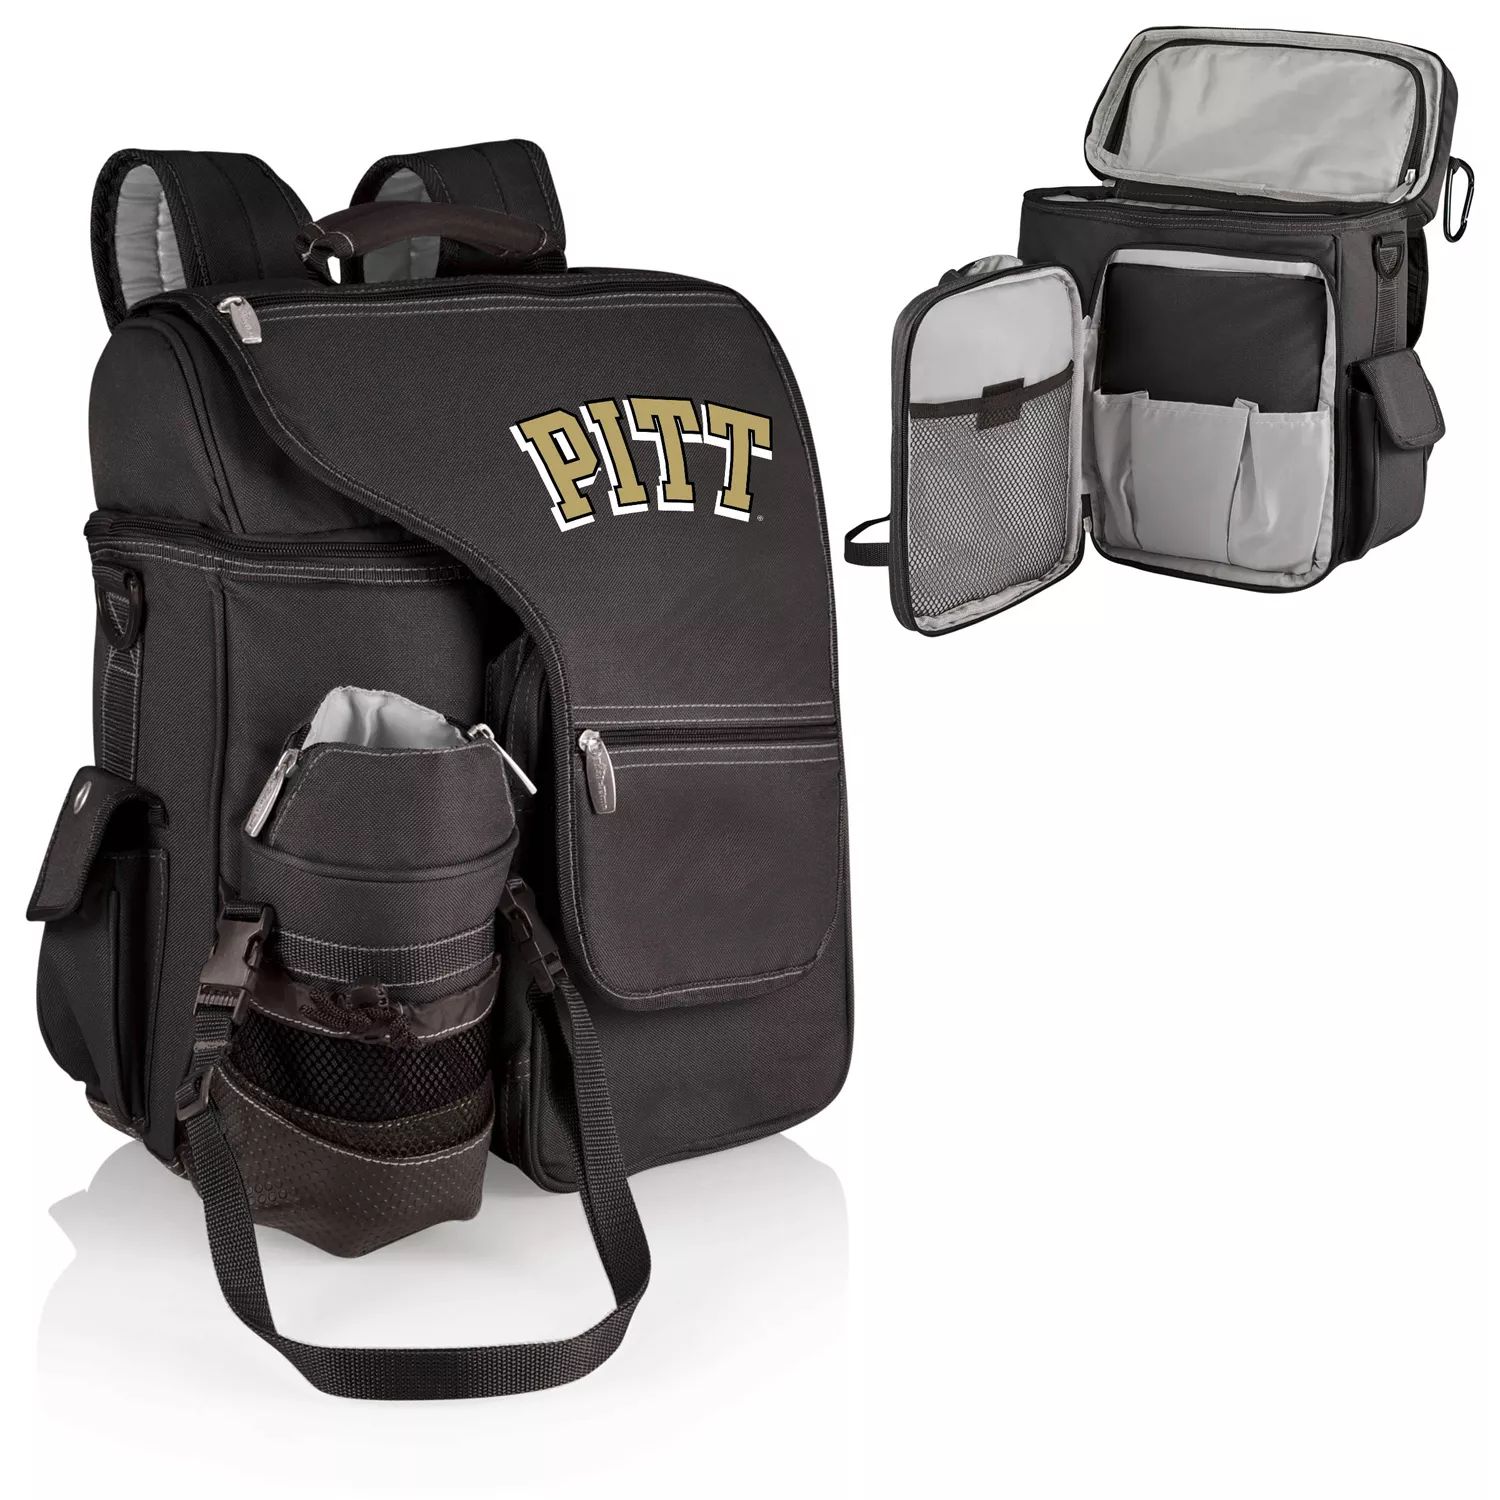 цена Утепленный рюкзак Pitt Panthers